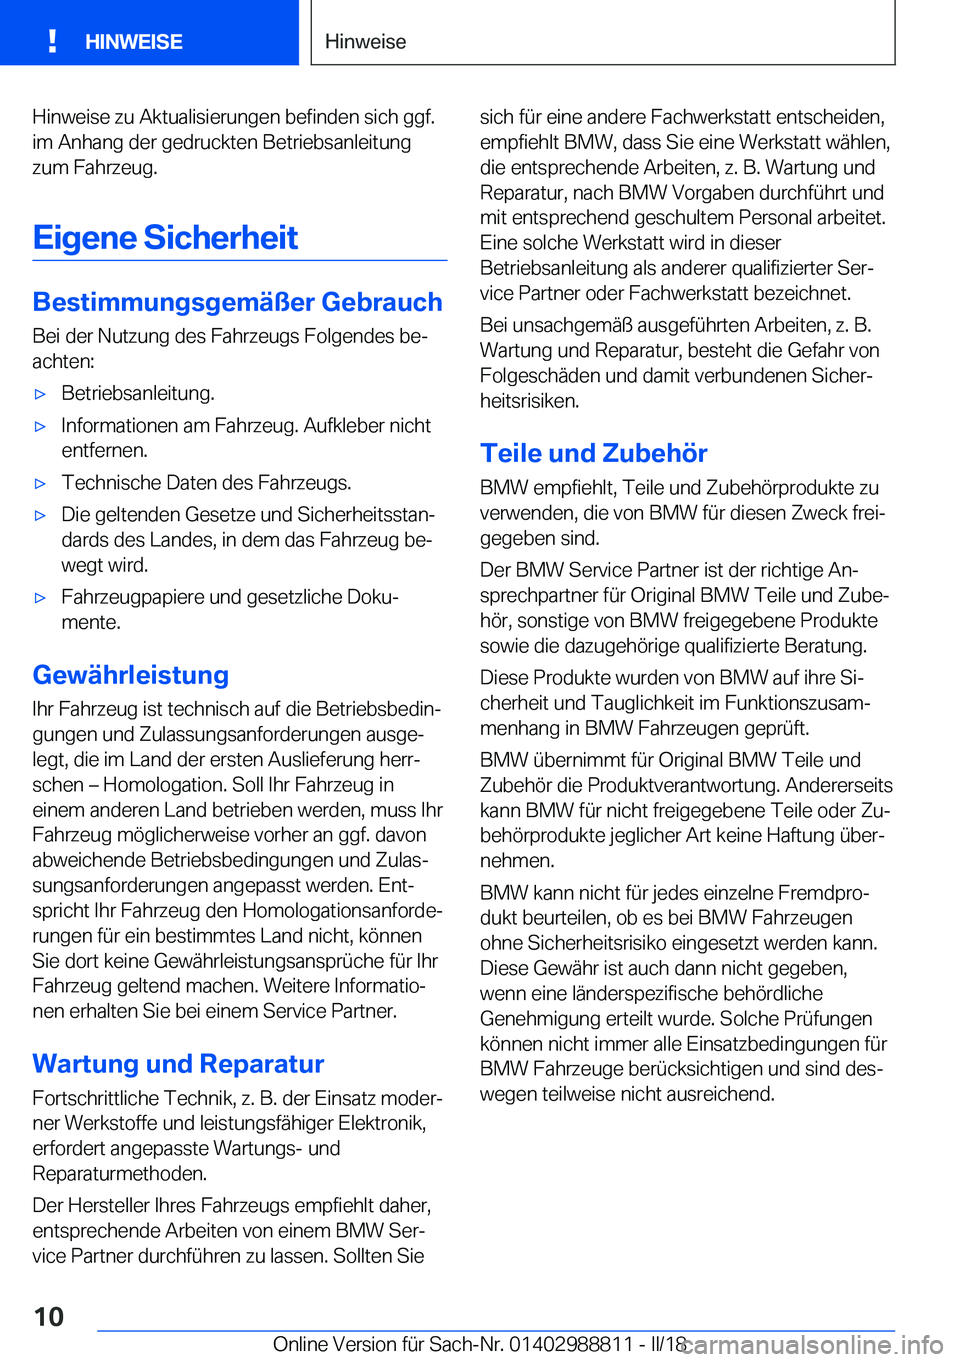 BMW X5 2018  Betriebsanleitungen (in German) �H�i�n�w�e�i�s�e� �z�u� �A�k�t�u�a�l�i�s�i�e�r�u�n�g�e�n� �b�e�f�i�n�d�e�n� �s�i�c�h� �g�g�f�.�i�m� �A�n�h�a�n�g� �d�e�r� �g�e�d�r�u�c�k�t�e�n� �B�e�t�r�i�e�b�s�a�n�l�e�i�t�u�n�g�z�u�m� �F�a�h�r�z�e�u